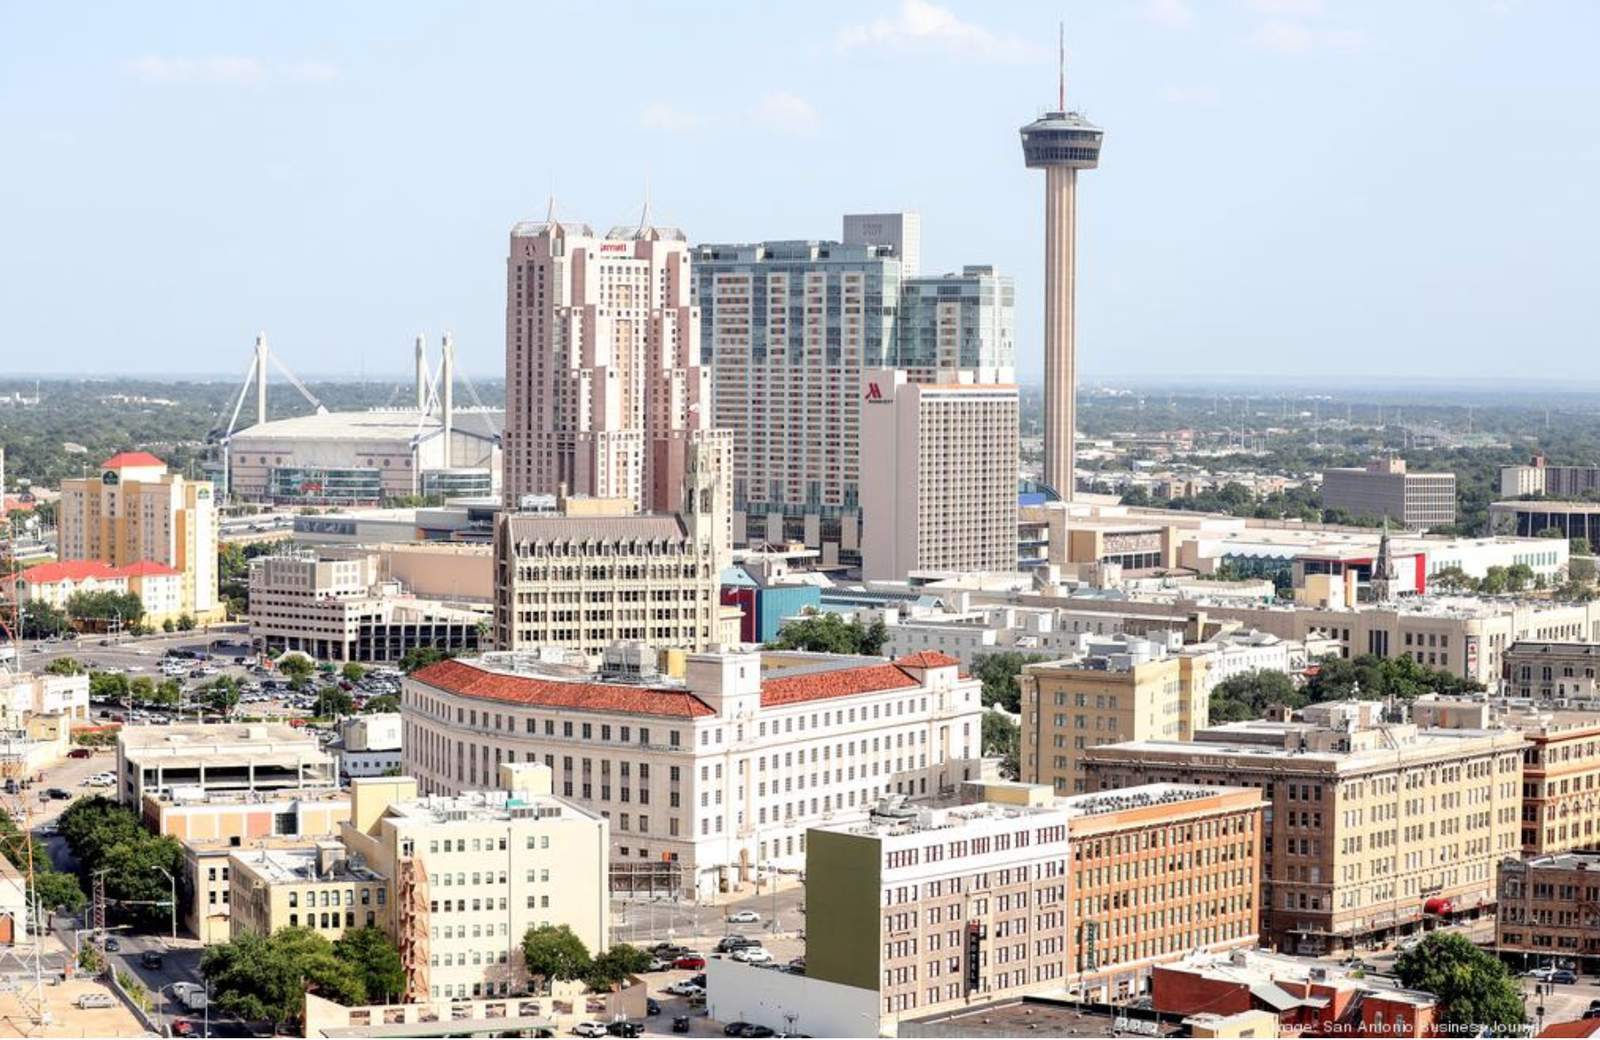 San Antonio hotels saw revenue drop more than $700M in 2020